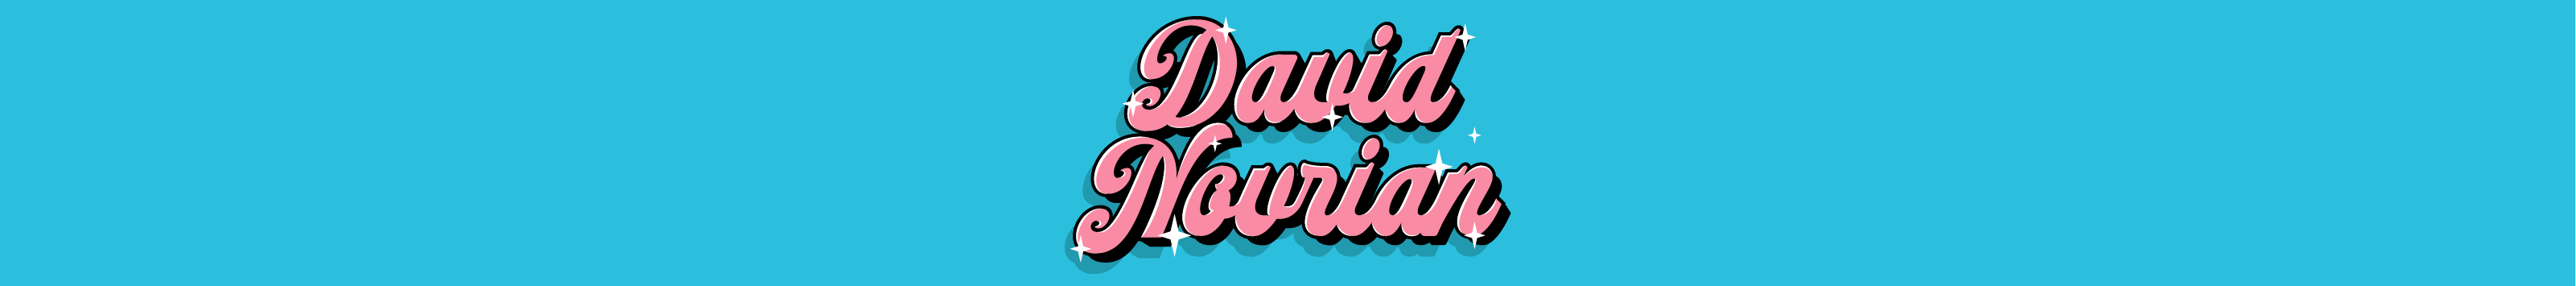 David Novrian's profile banner